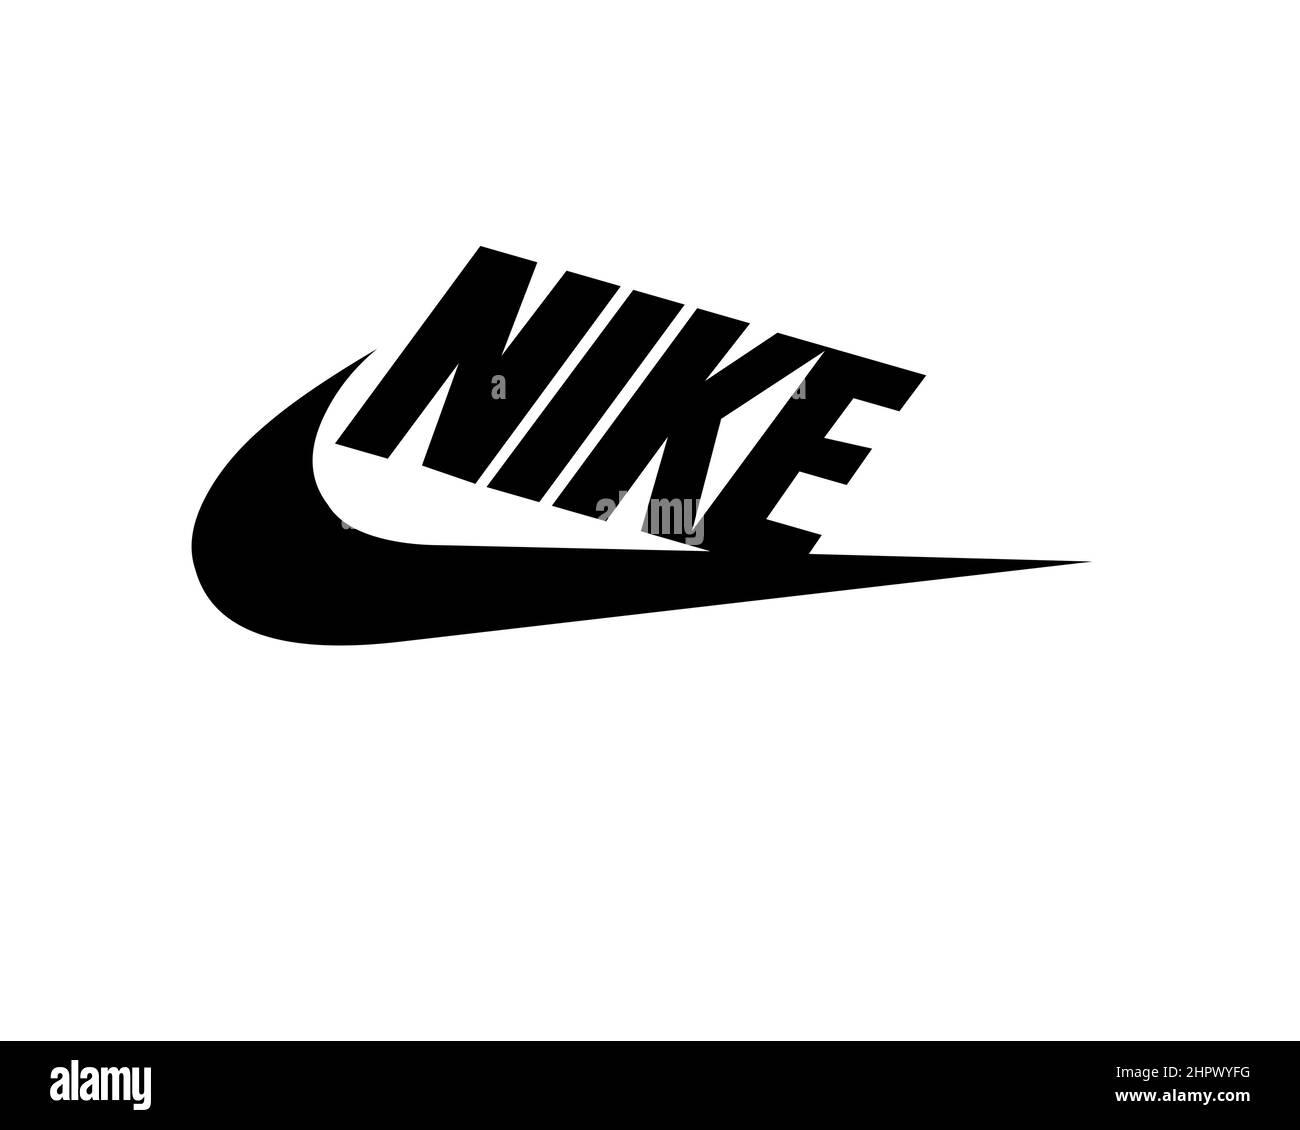 Nike, Inc. Nike, ruotata, sfondo bianco, logo, nome commerciale Foto stock  - Alamy